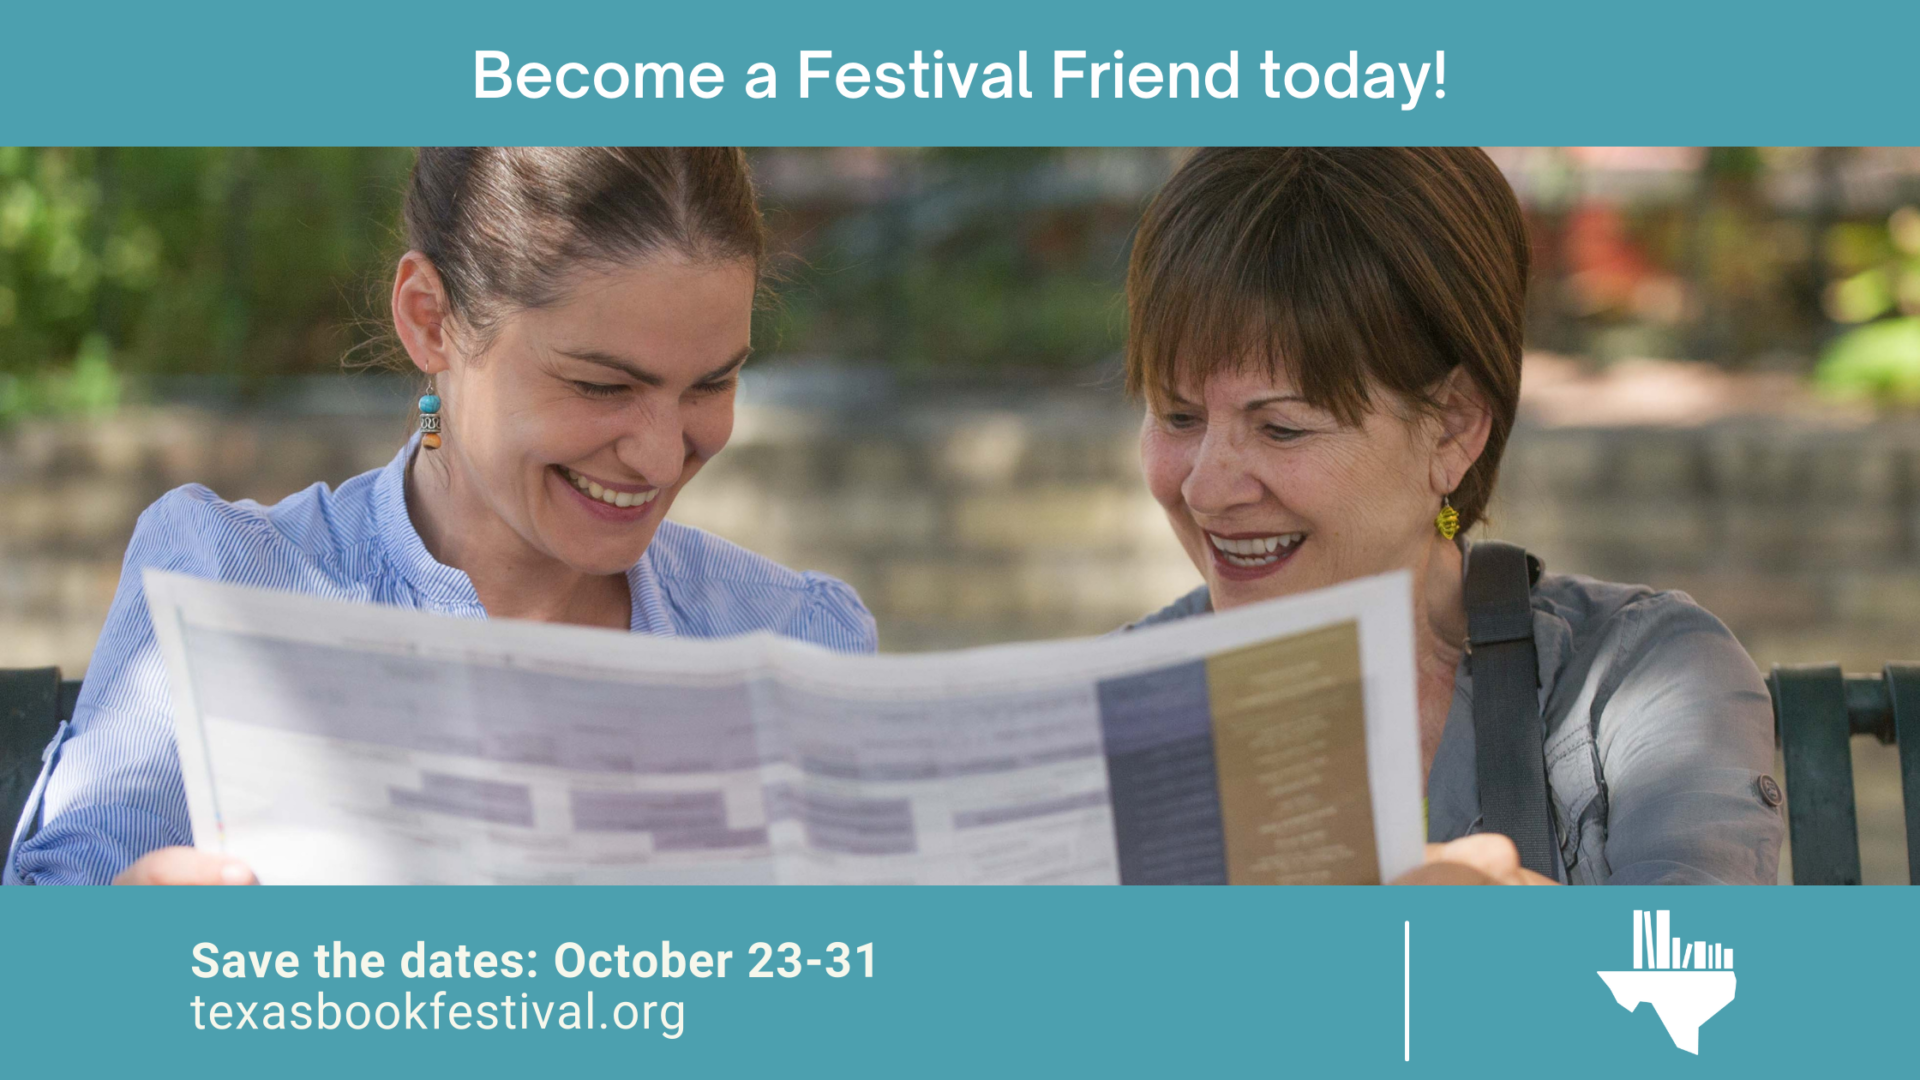 Be a Festival Friend